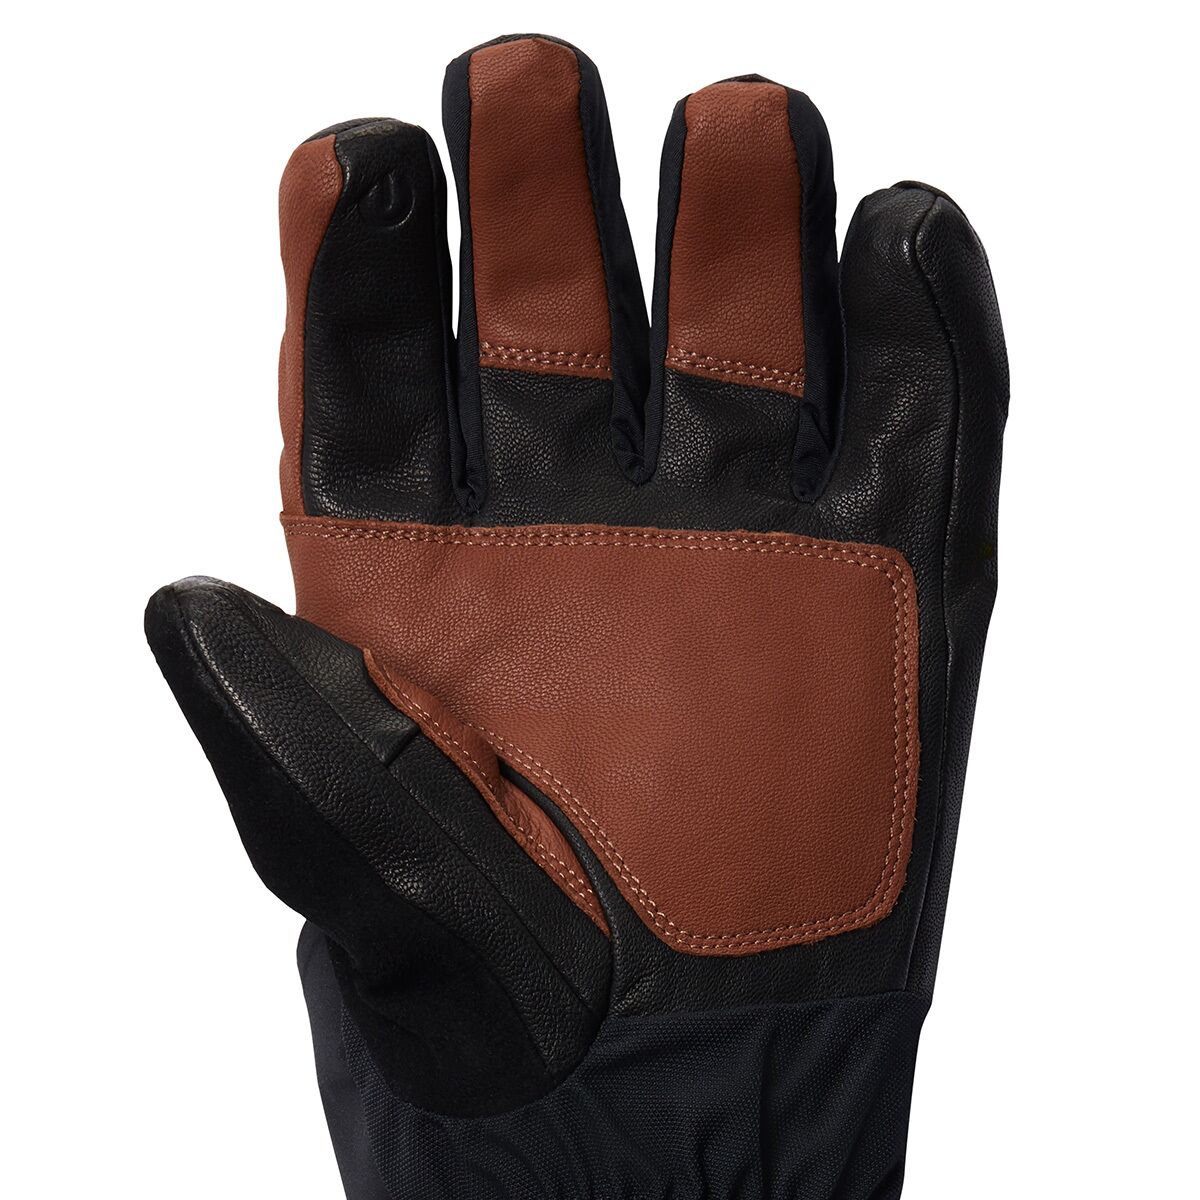 Mountain Hardwear High Exposure Gore-Tex Gloves GREEN Leather Mens Small SKI